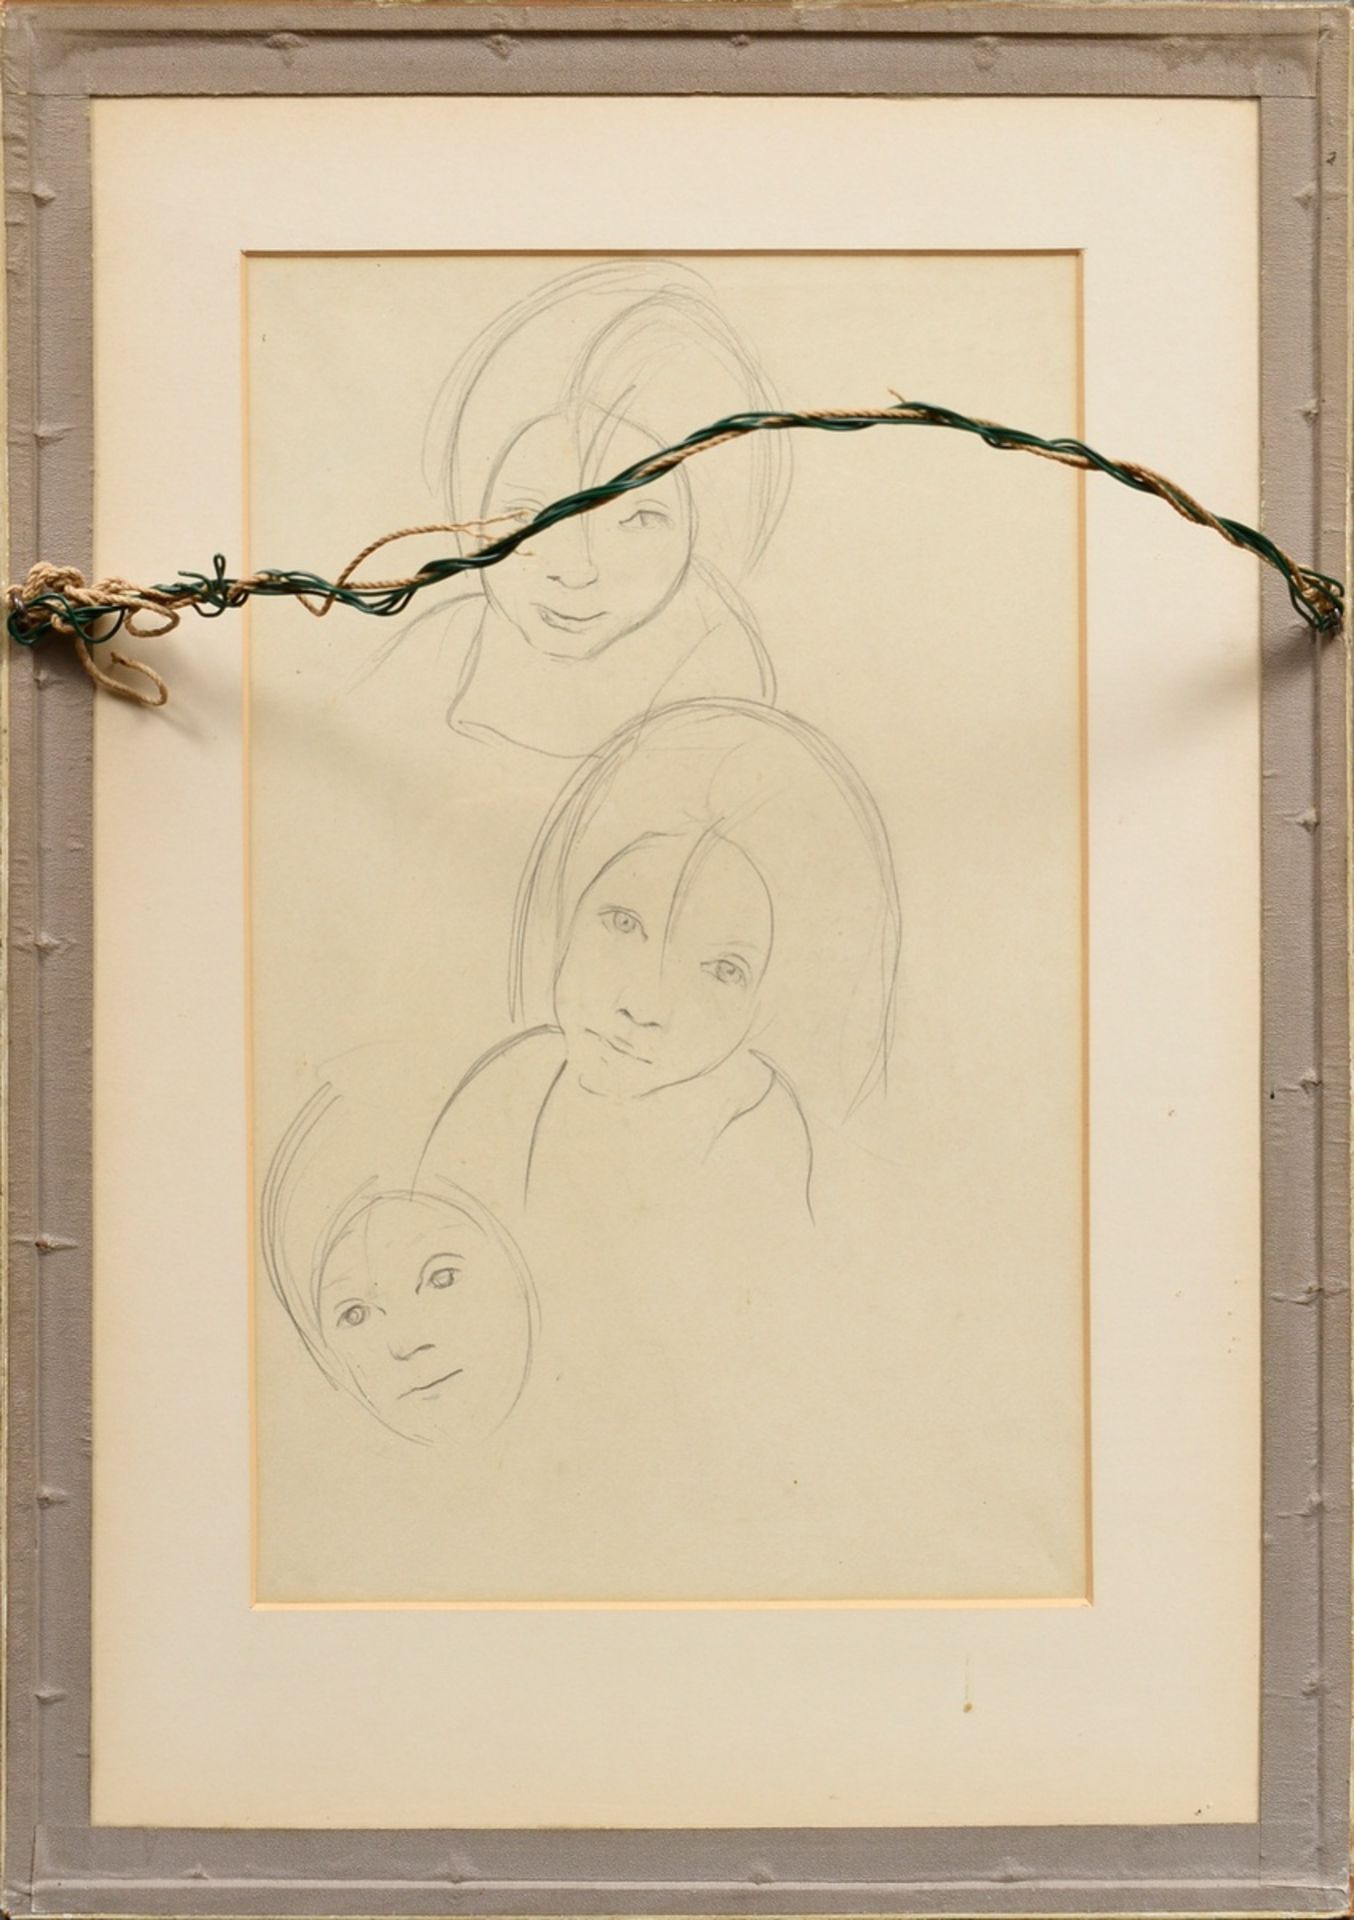 Modersohn-Becker, Paula (1876-1907) "Sitting old man", verso "Three girls' heads", pencil, b.r. mon - Image 4 of 4